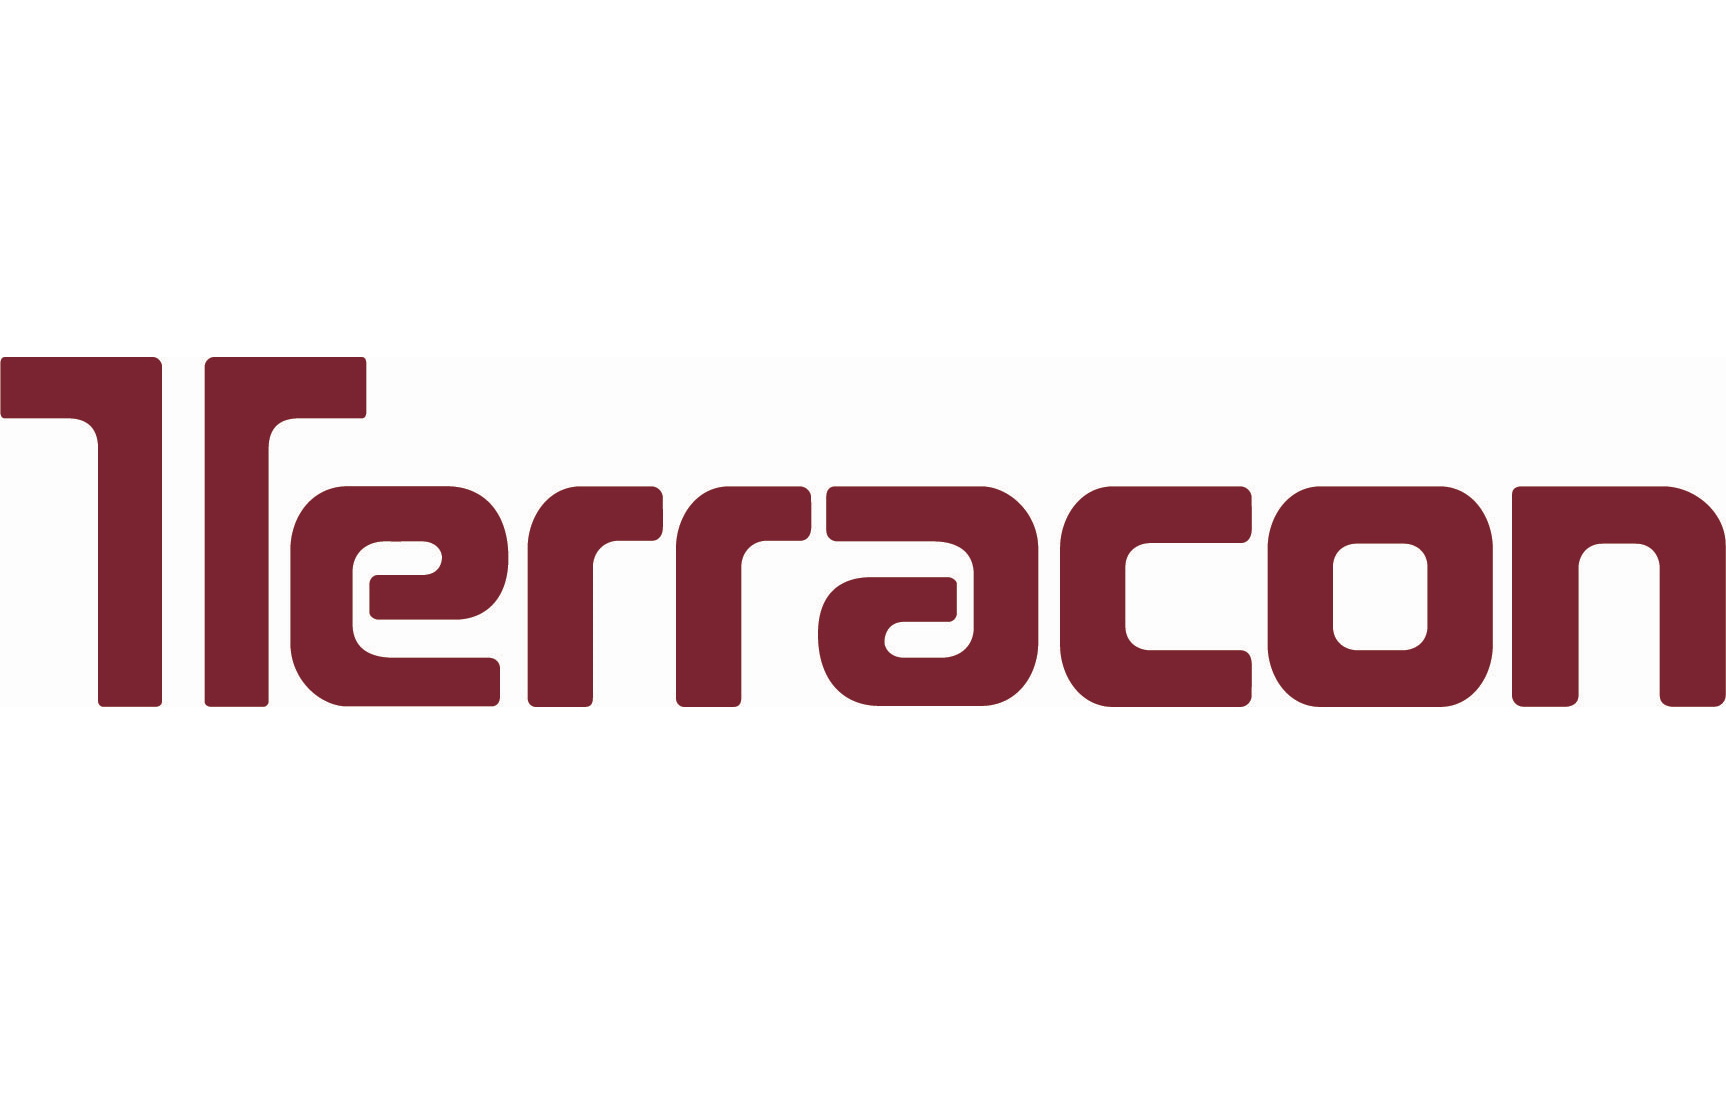 Terracon Consultants